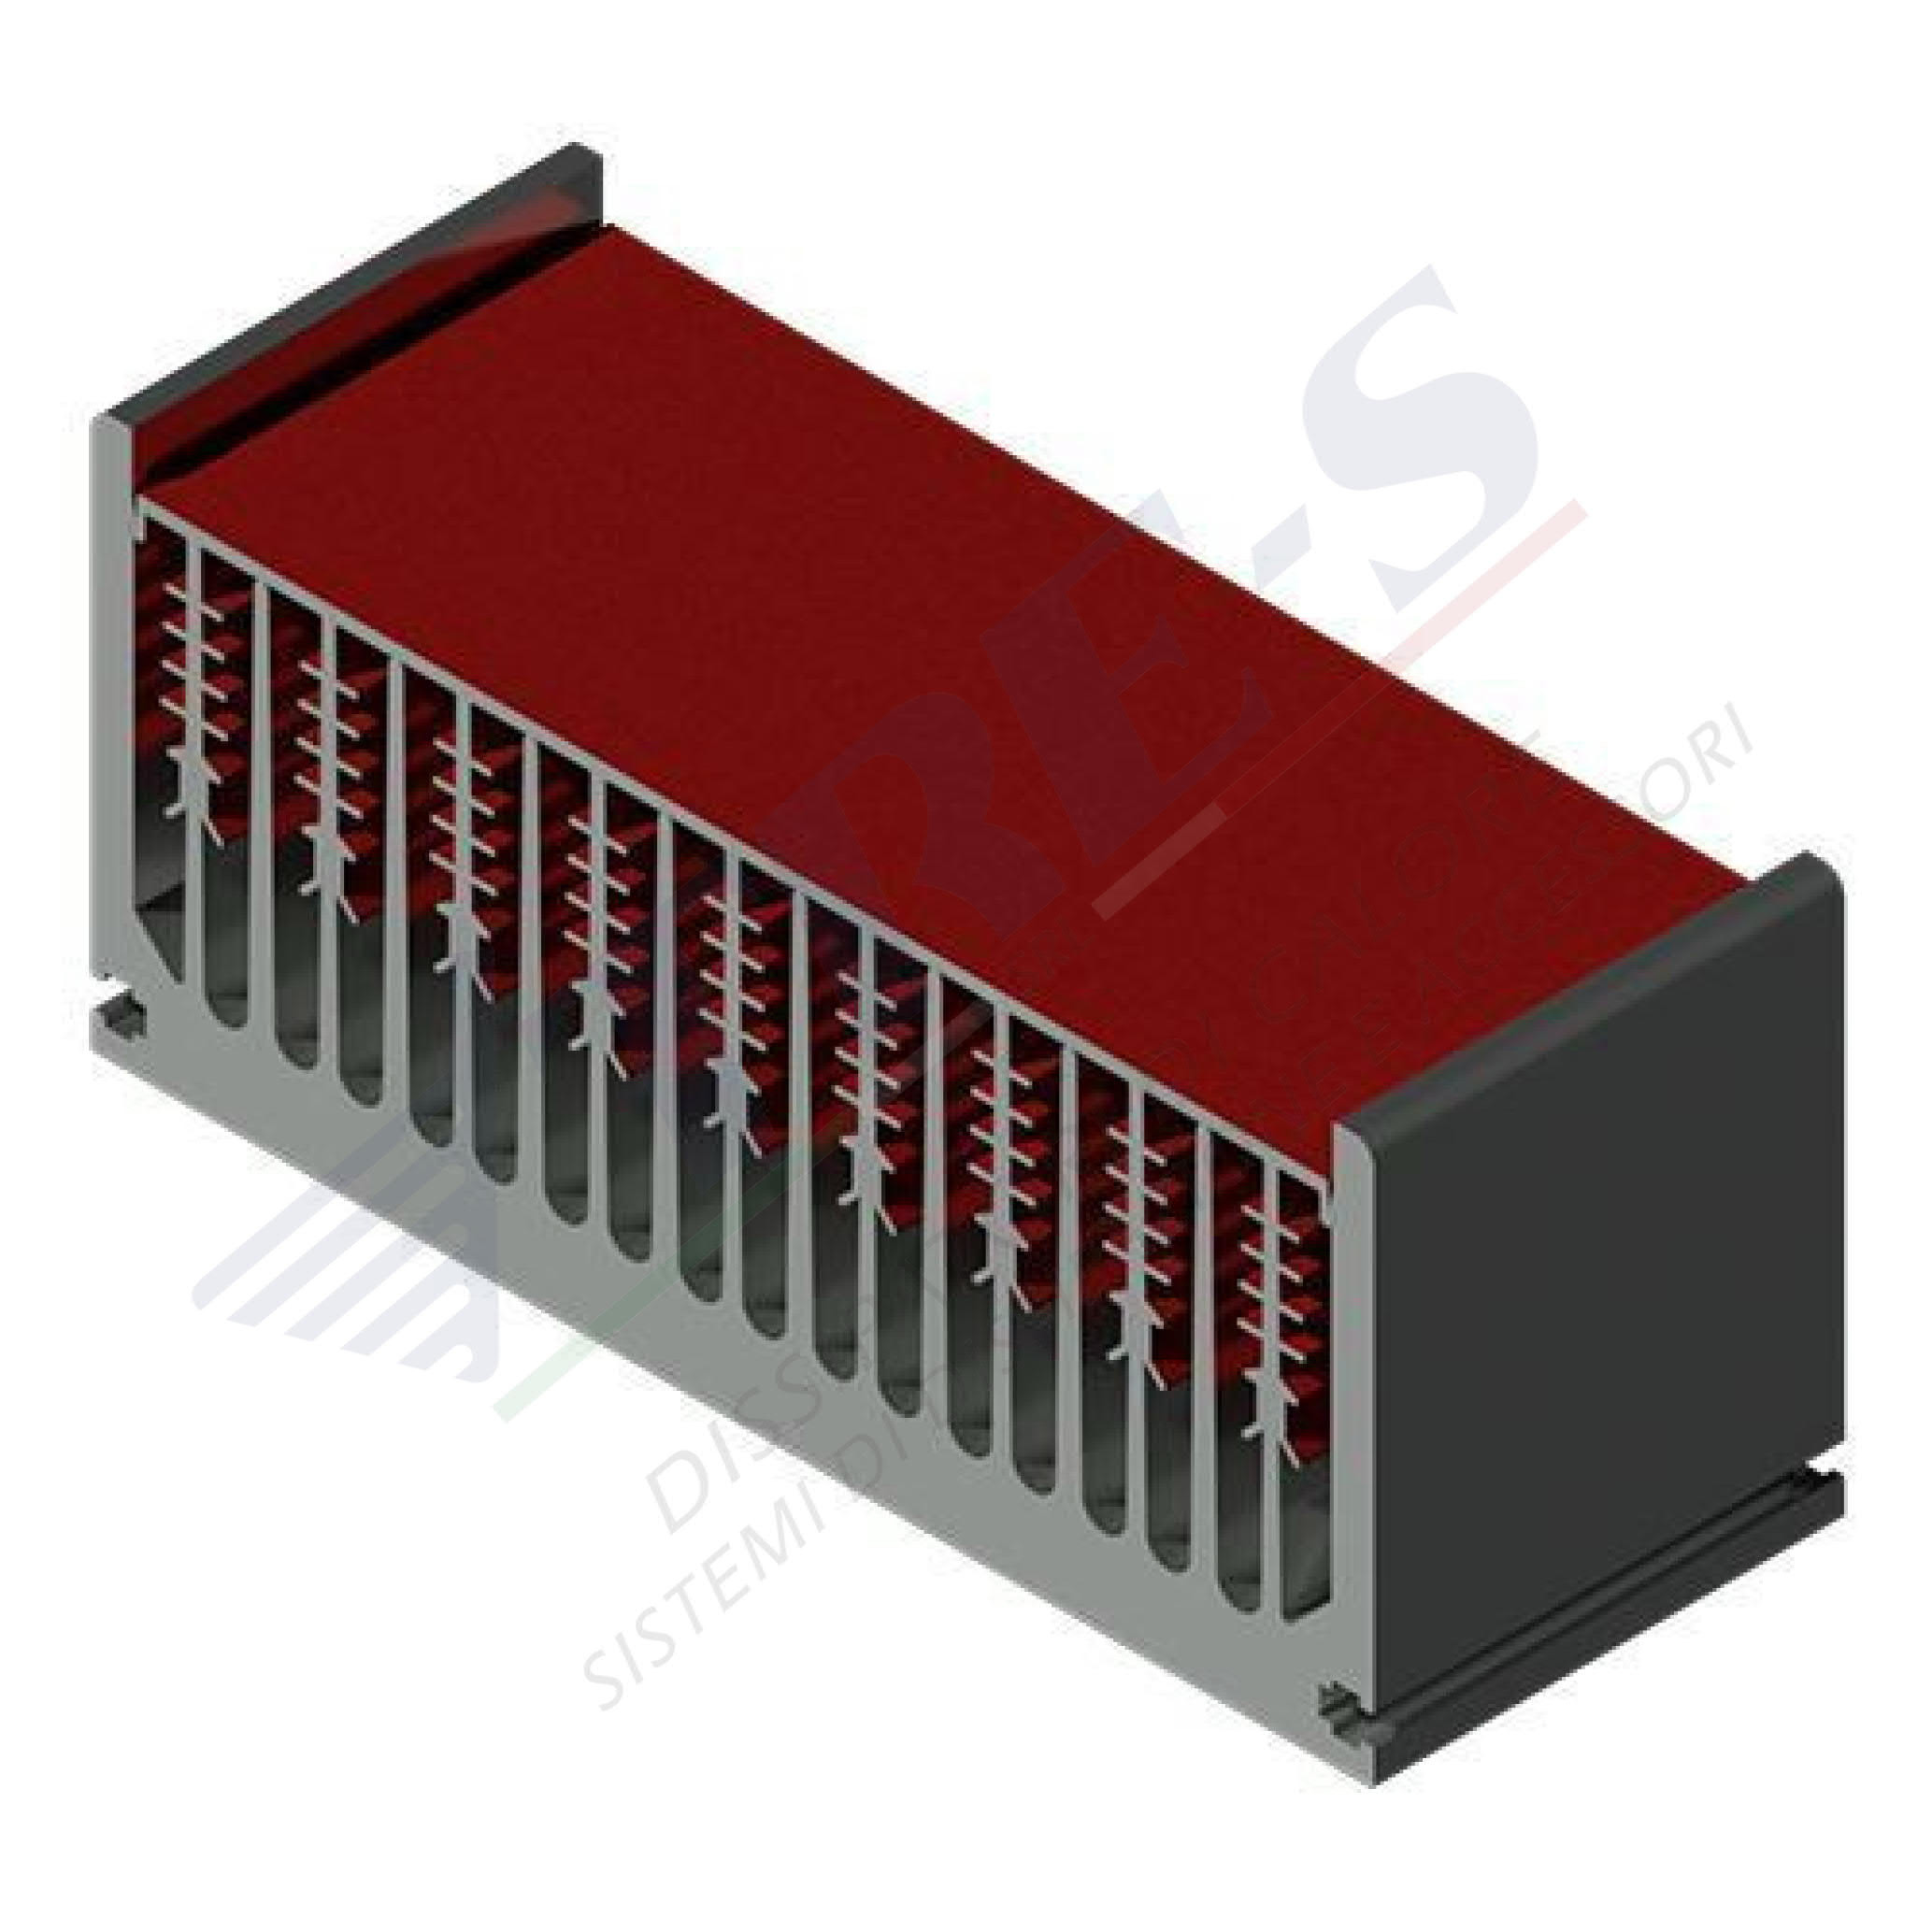 PRO1294 - Heat sinks for power modules